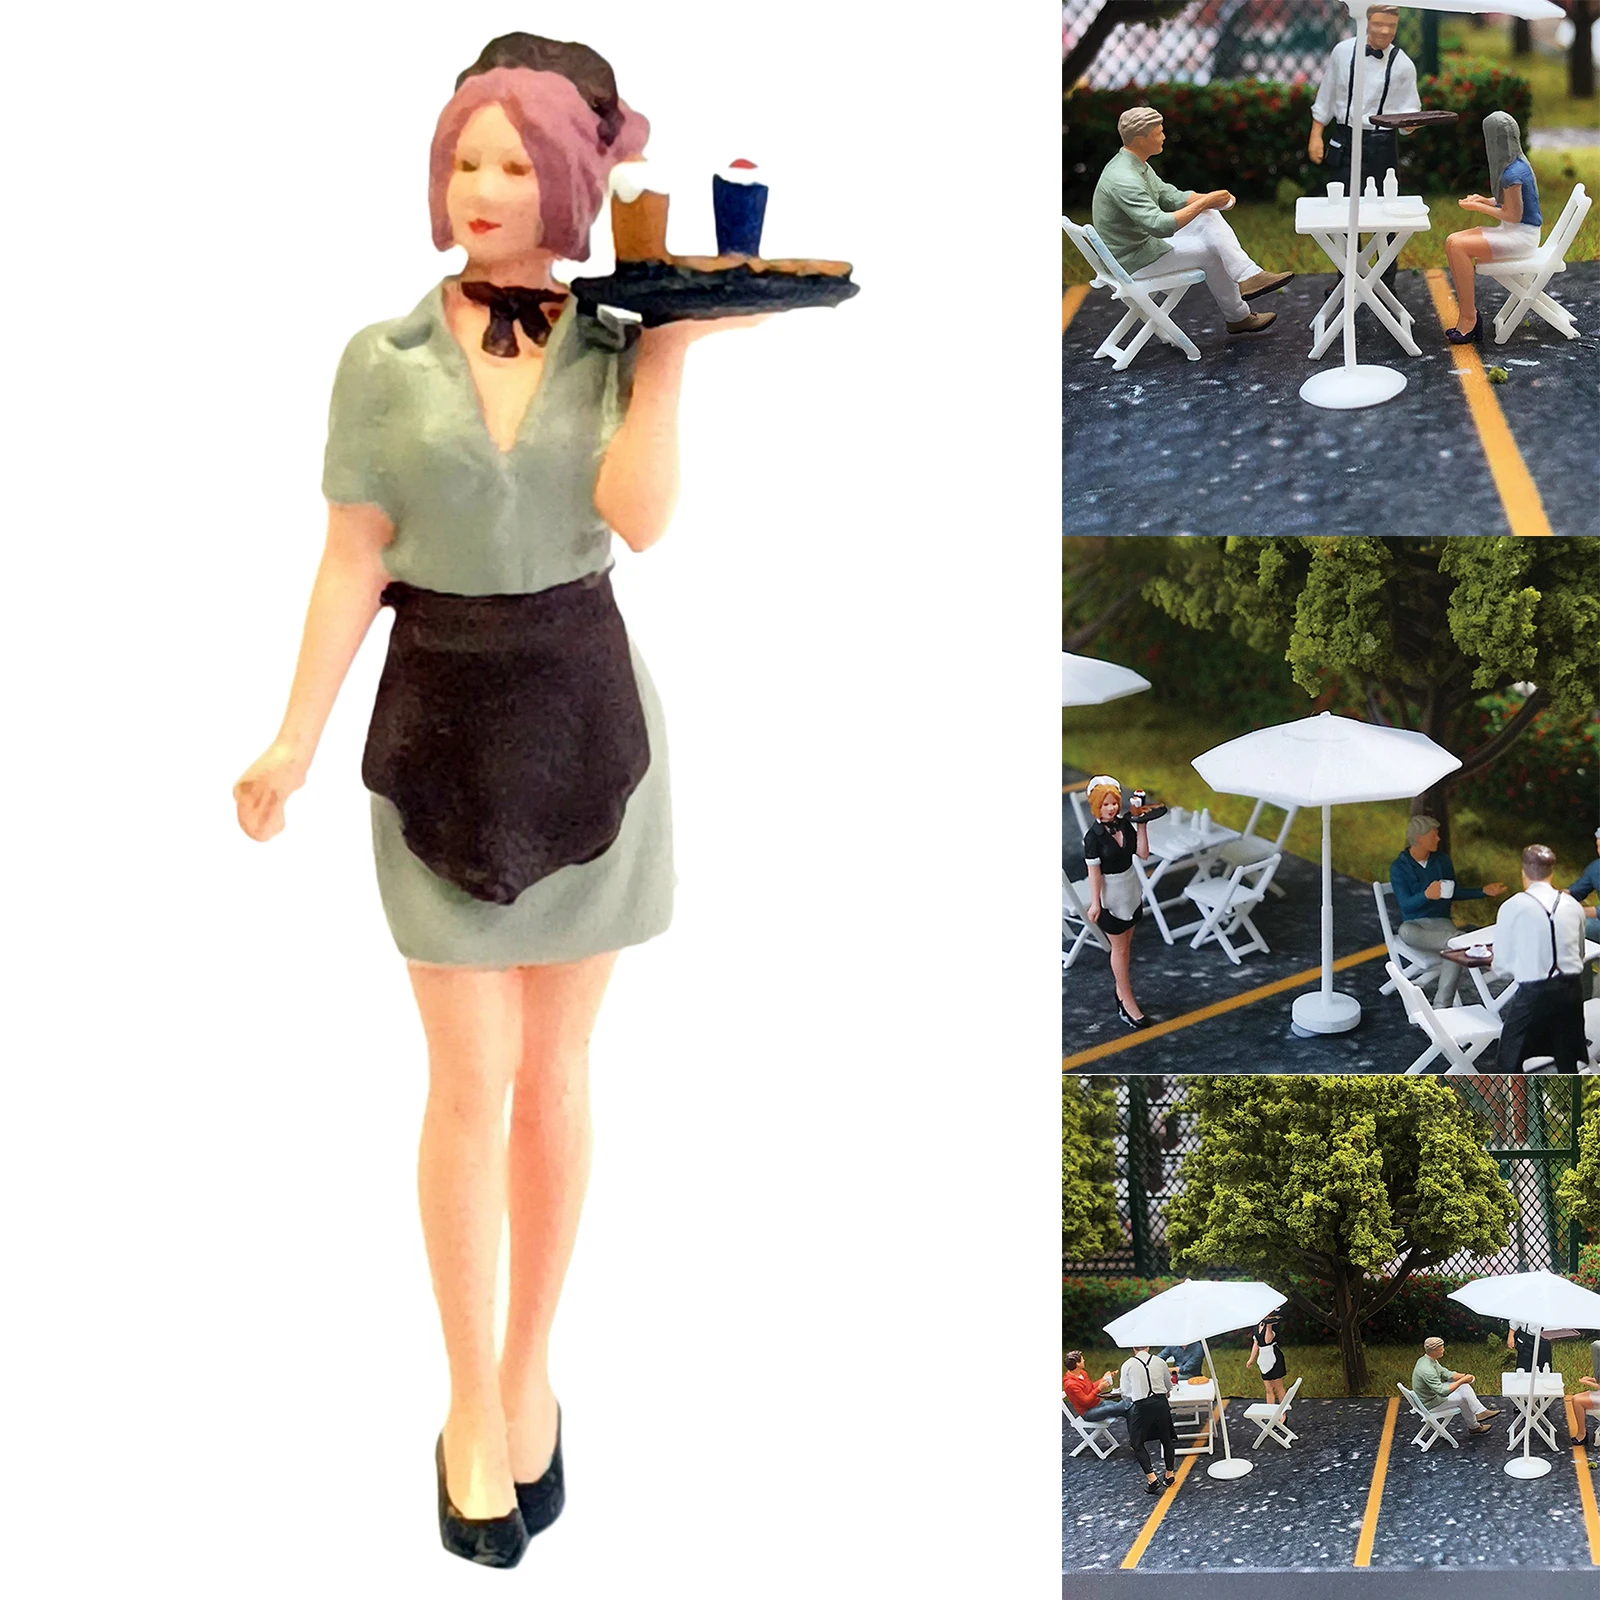 RM 1/64 Painted Mini Figure Waiter Waitress Manger Doll Miniature Street Scene Train Railway DIY Model Building Kits Diorama